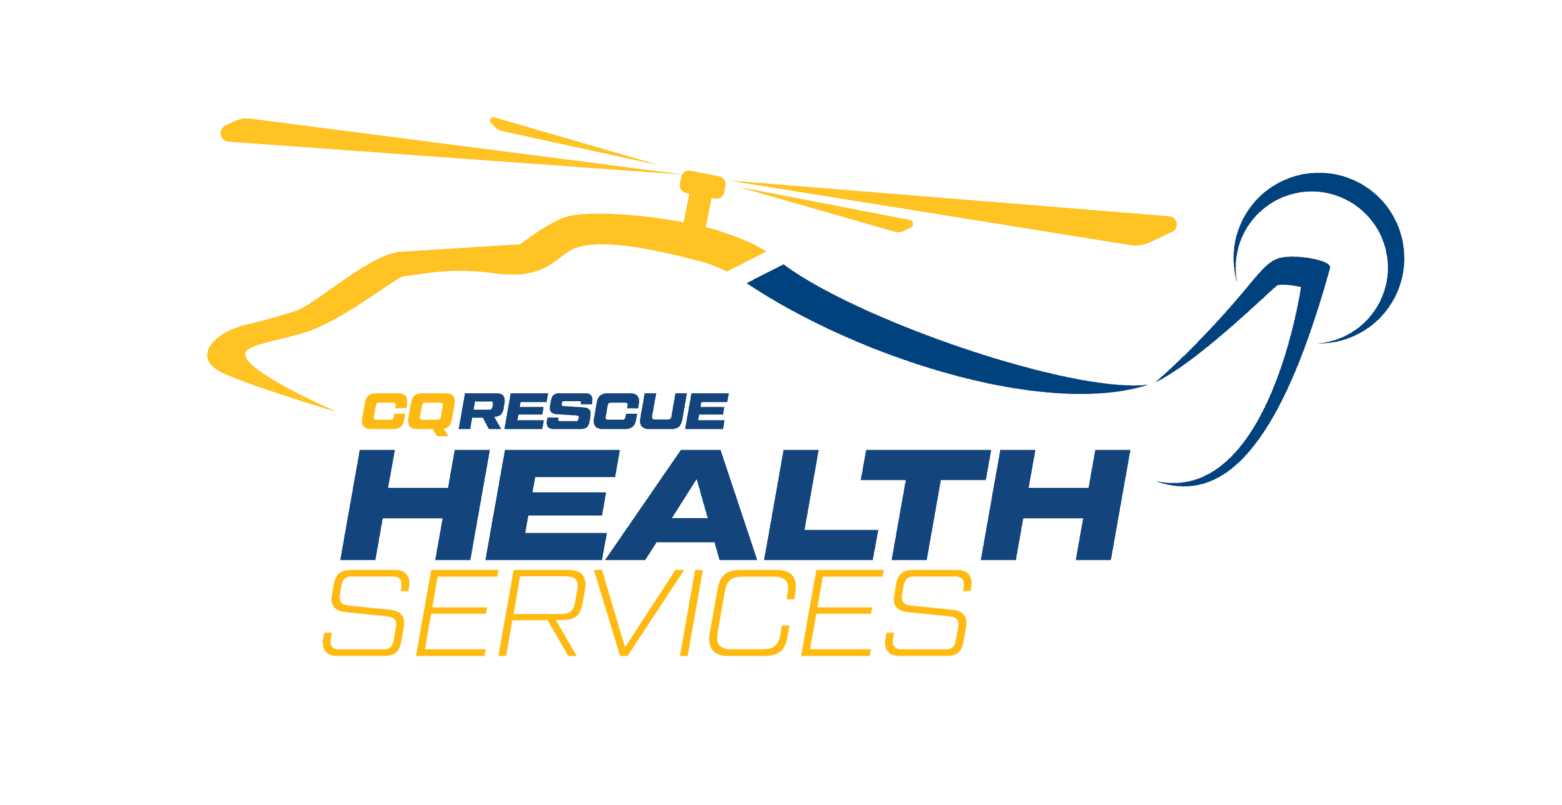 cqrescue_Health_logo_(2022 update)_Primary_Full Colour